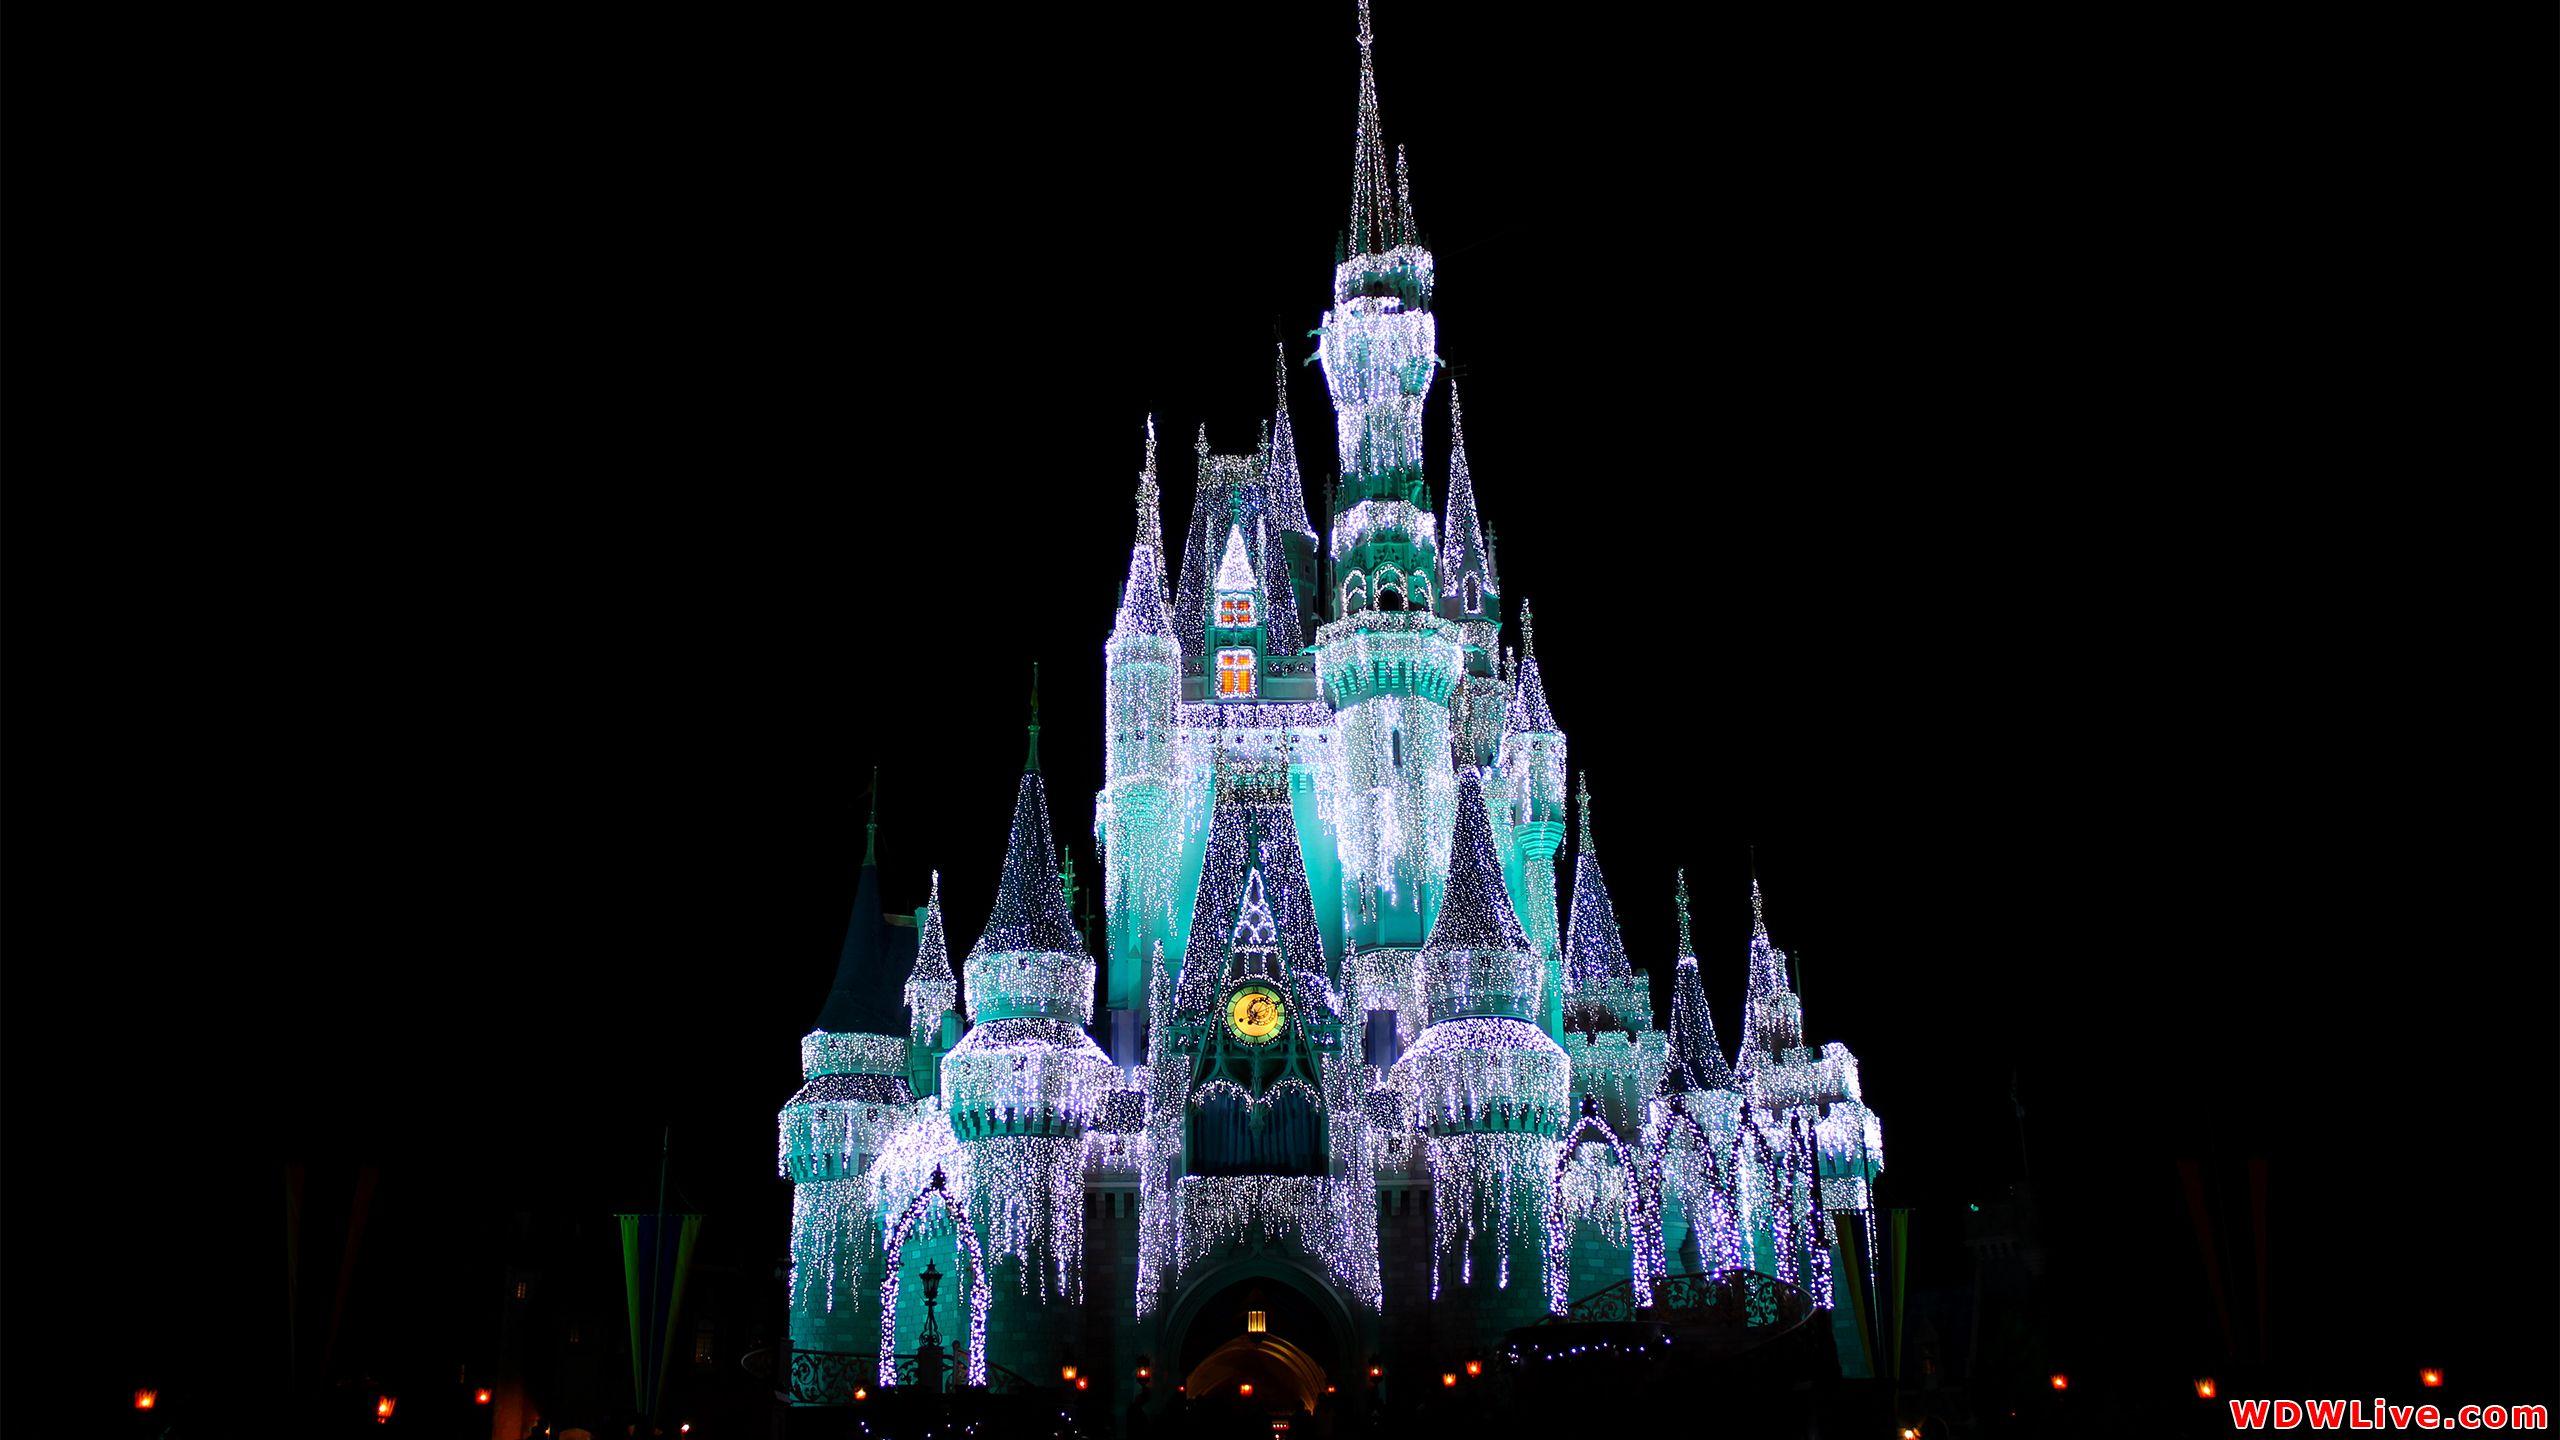 Cinderella Castle: Castle Dream Lights: Cinderella Castle all